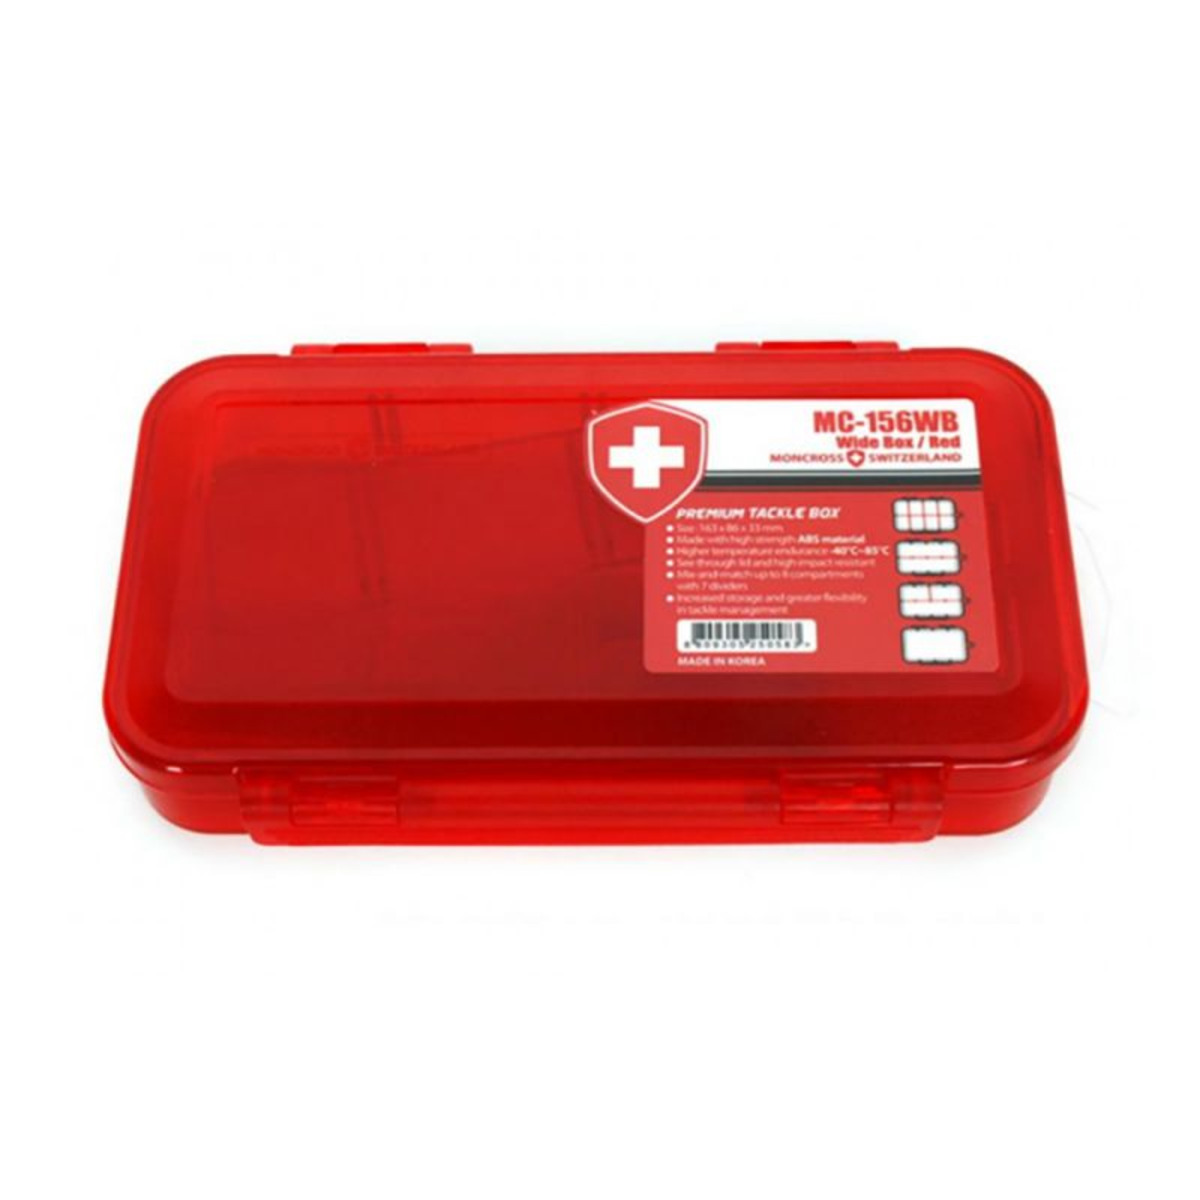 Moncross Switzerland Tackle Box Mc 156 Wb - Red